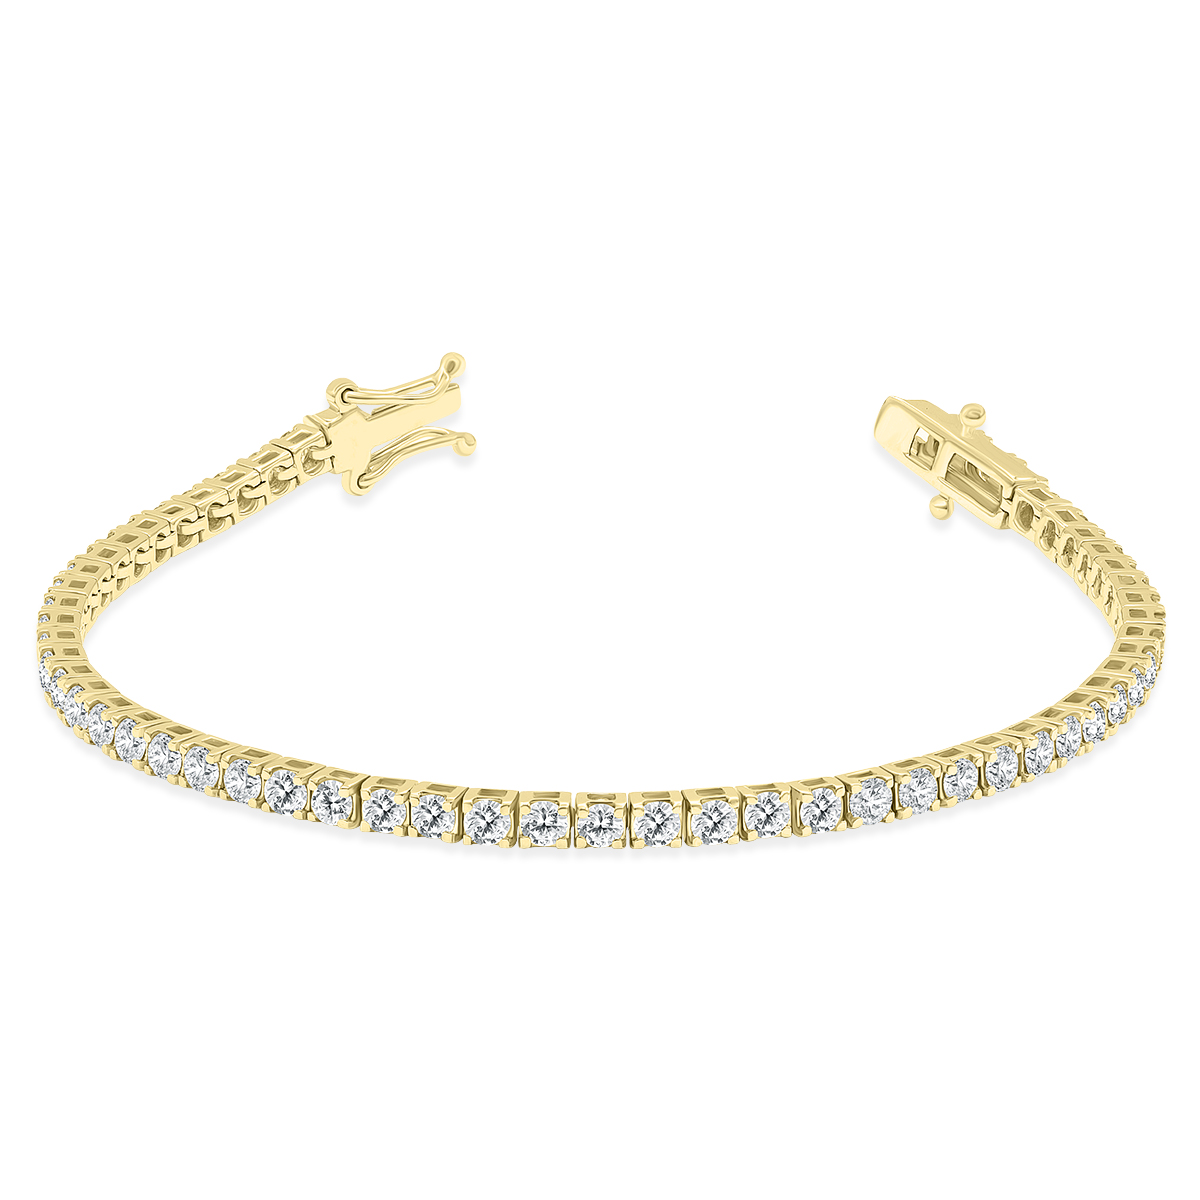 6 Carat TW Diamond Tennis Bracelet in 14K Yellow Gold